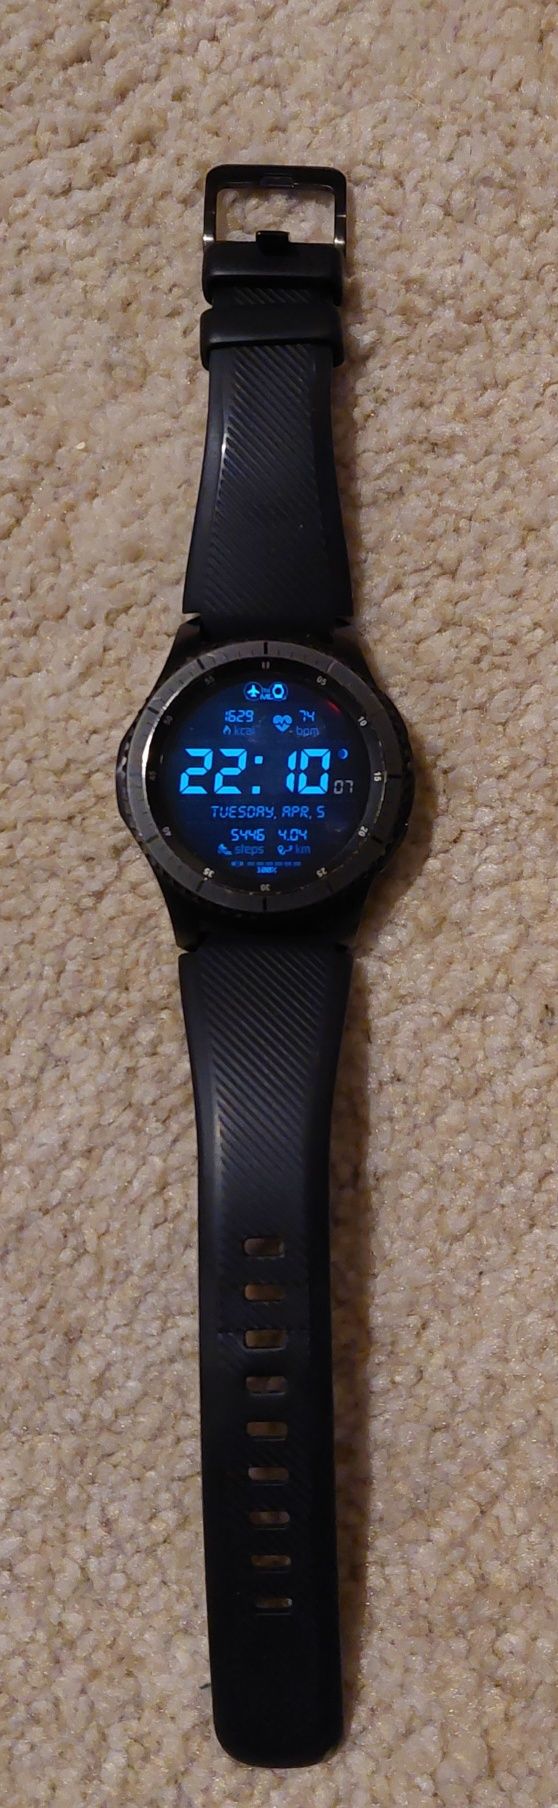 Relógio Samsung Gear S3